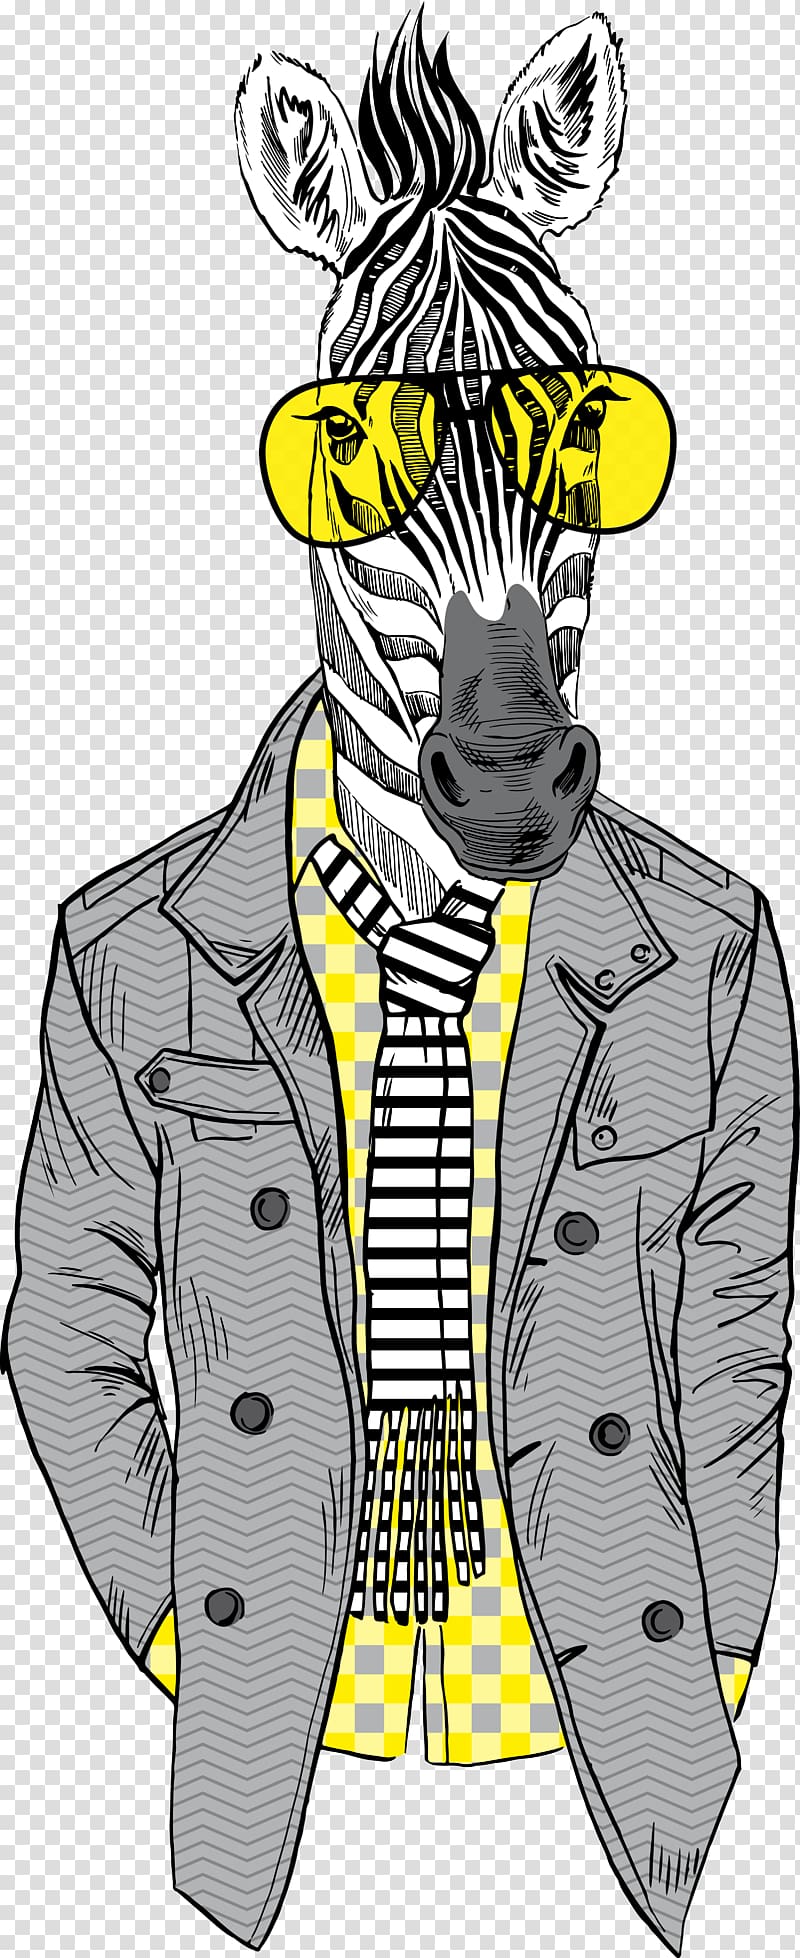 zebra wearing jacket and sunglasses illustration, Horse Fashion illustration Zebra, Bespectacled zebra transparent background PNG clipart